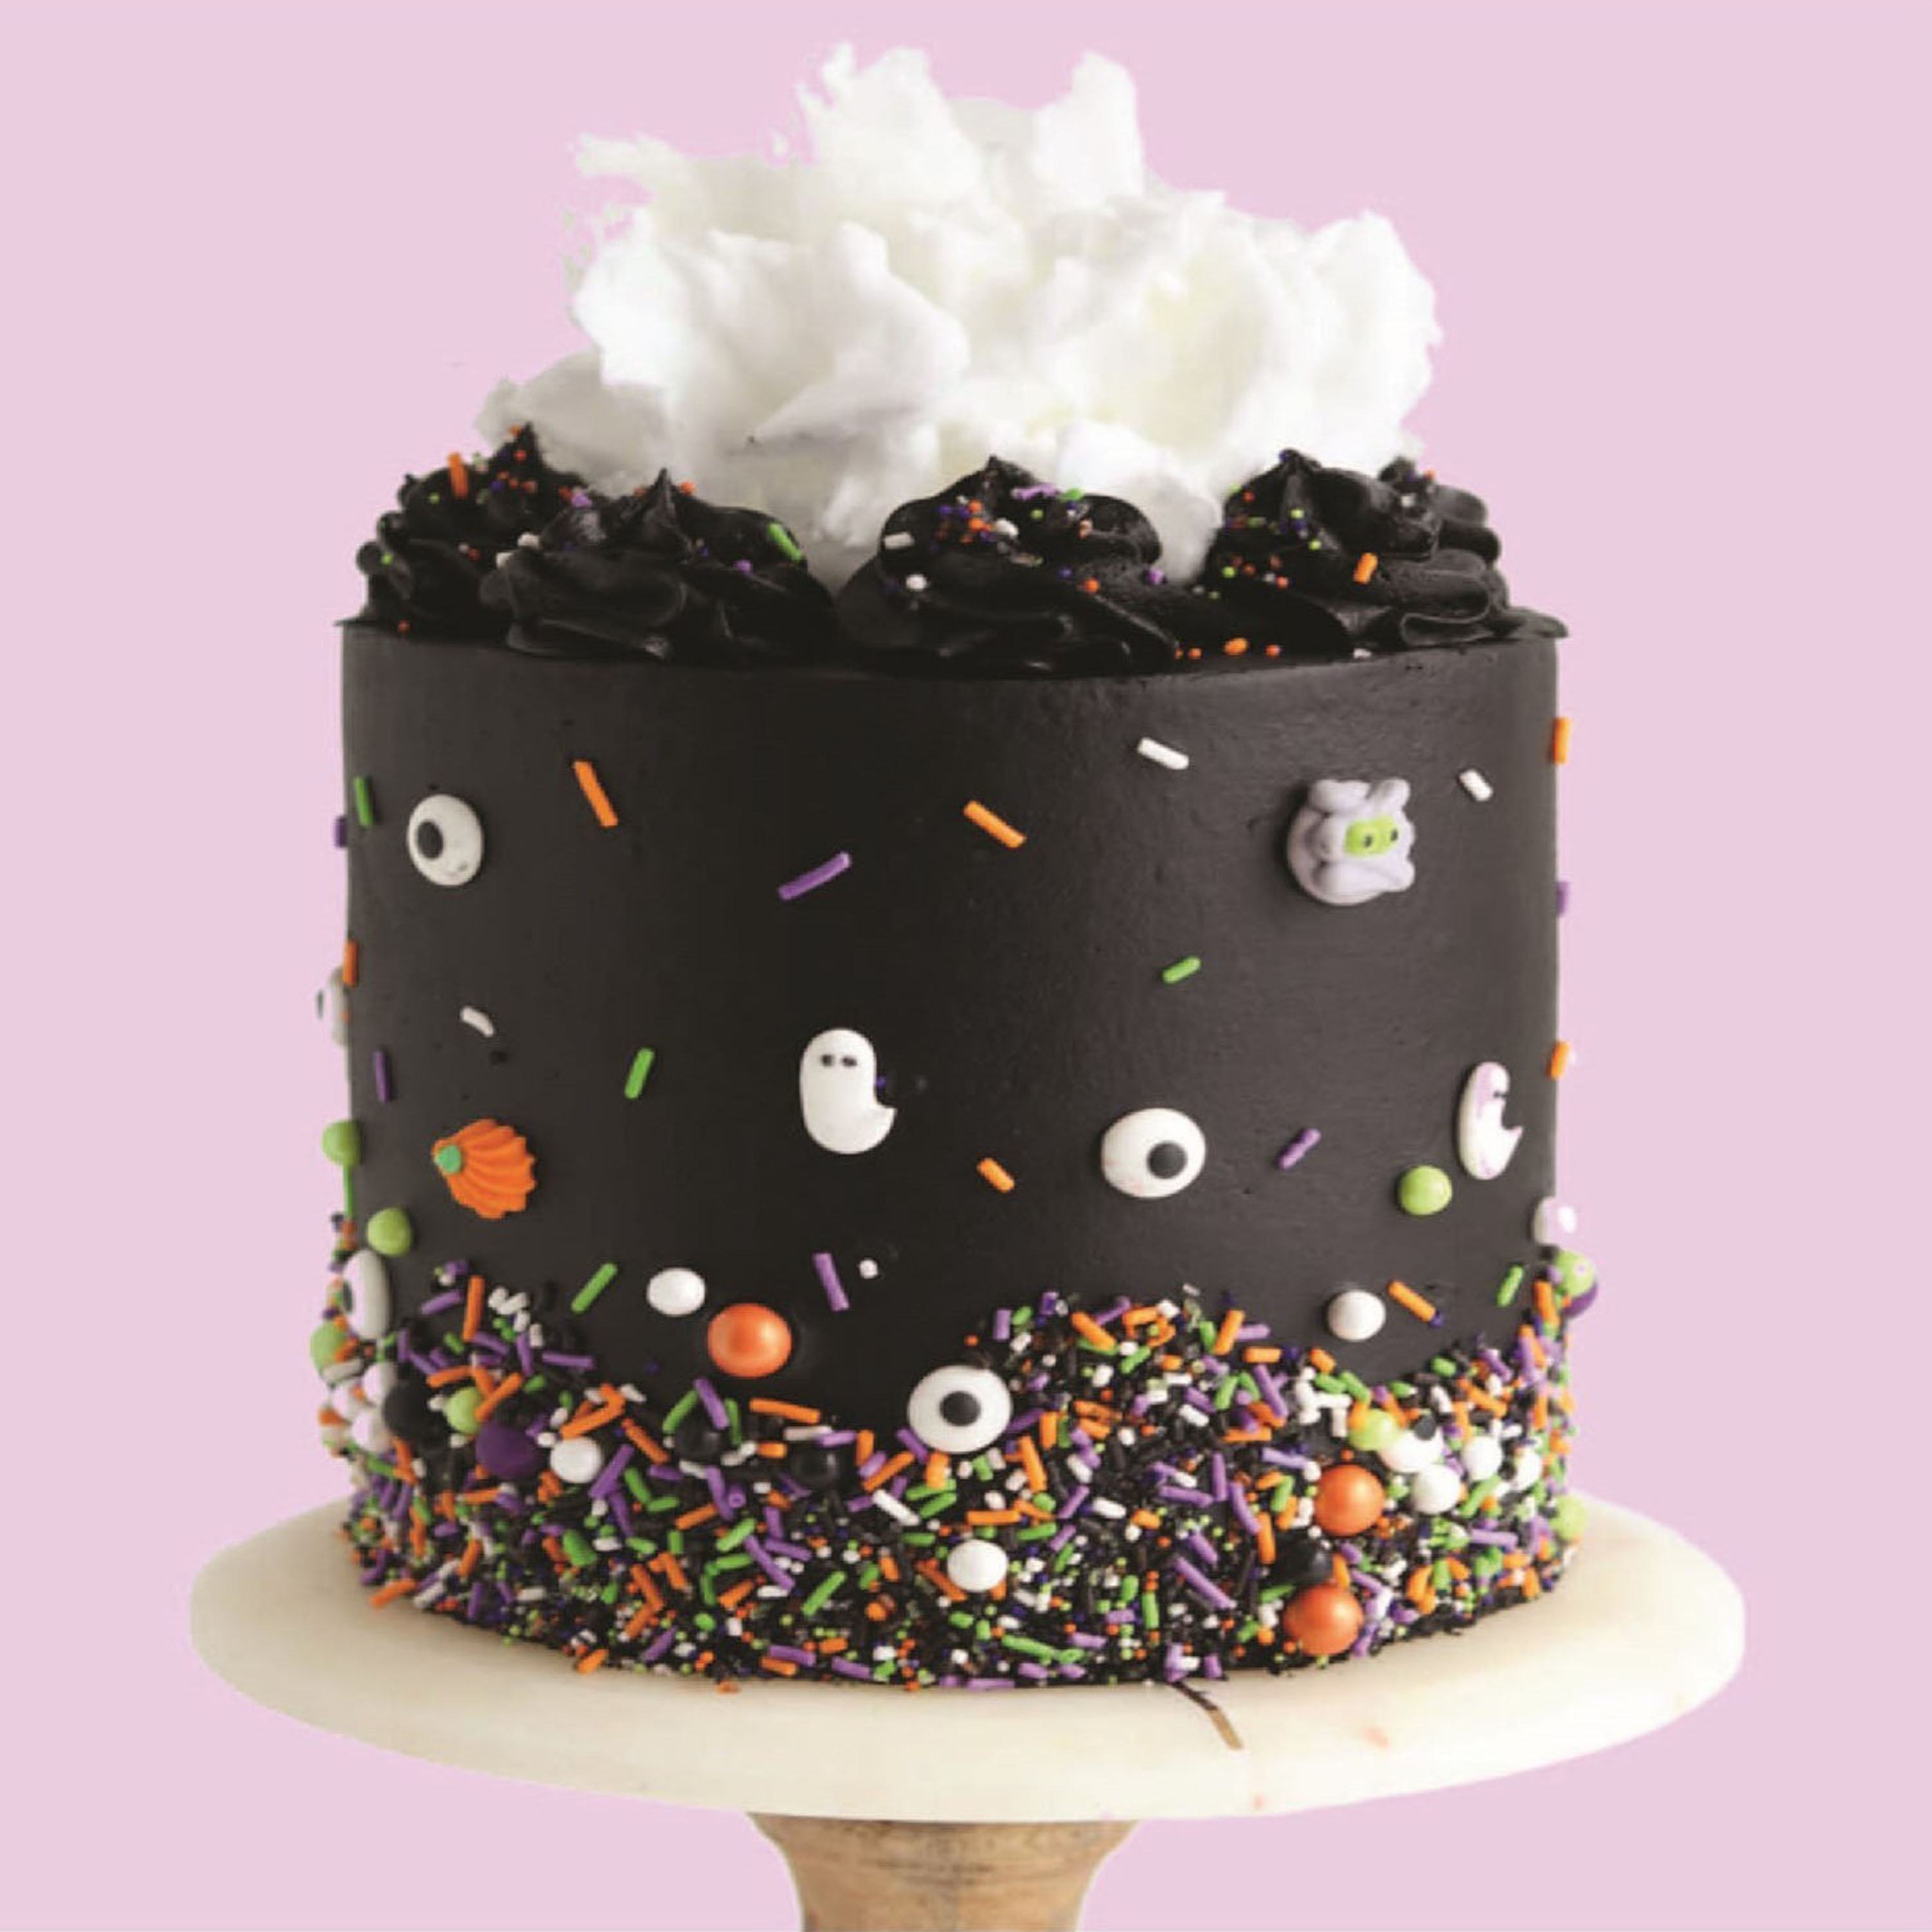 Cake Craft Black Fondant Icing, Vanilla Flavored, 1.5 lb.